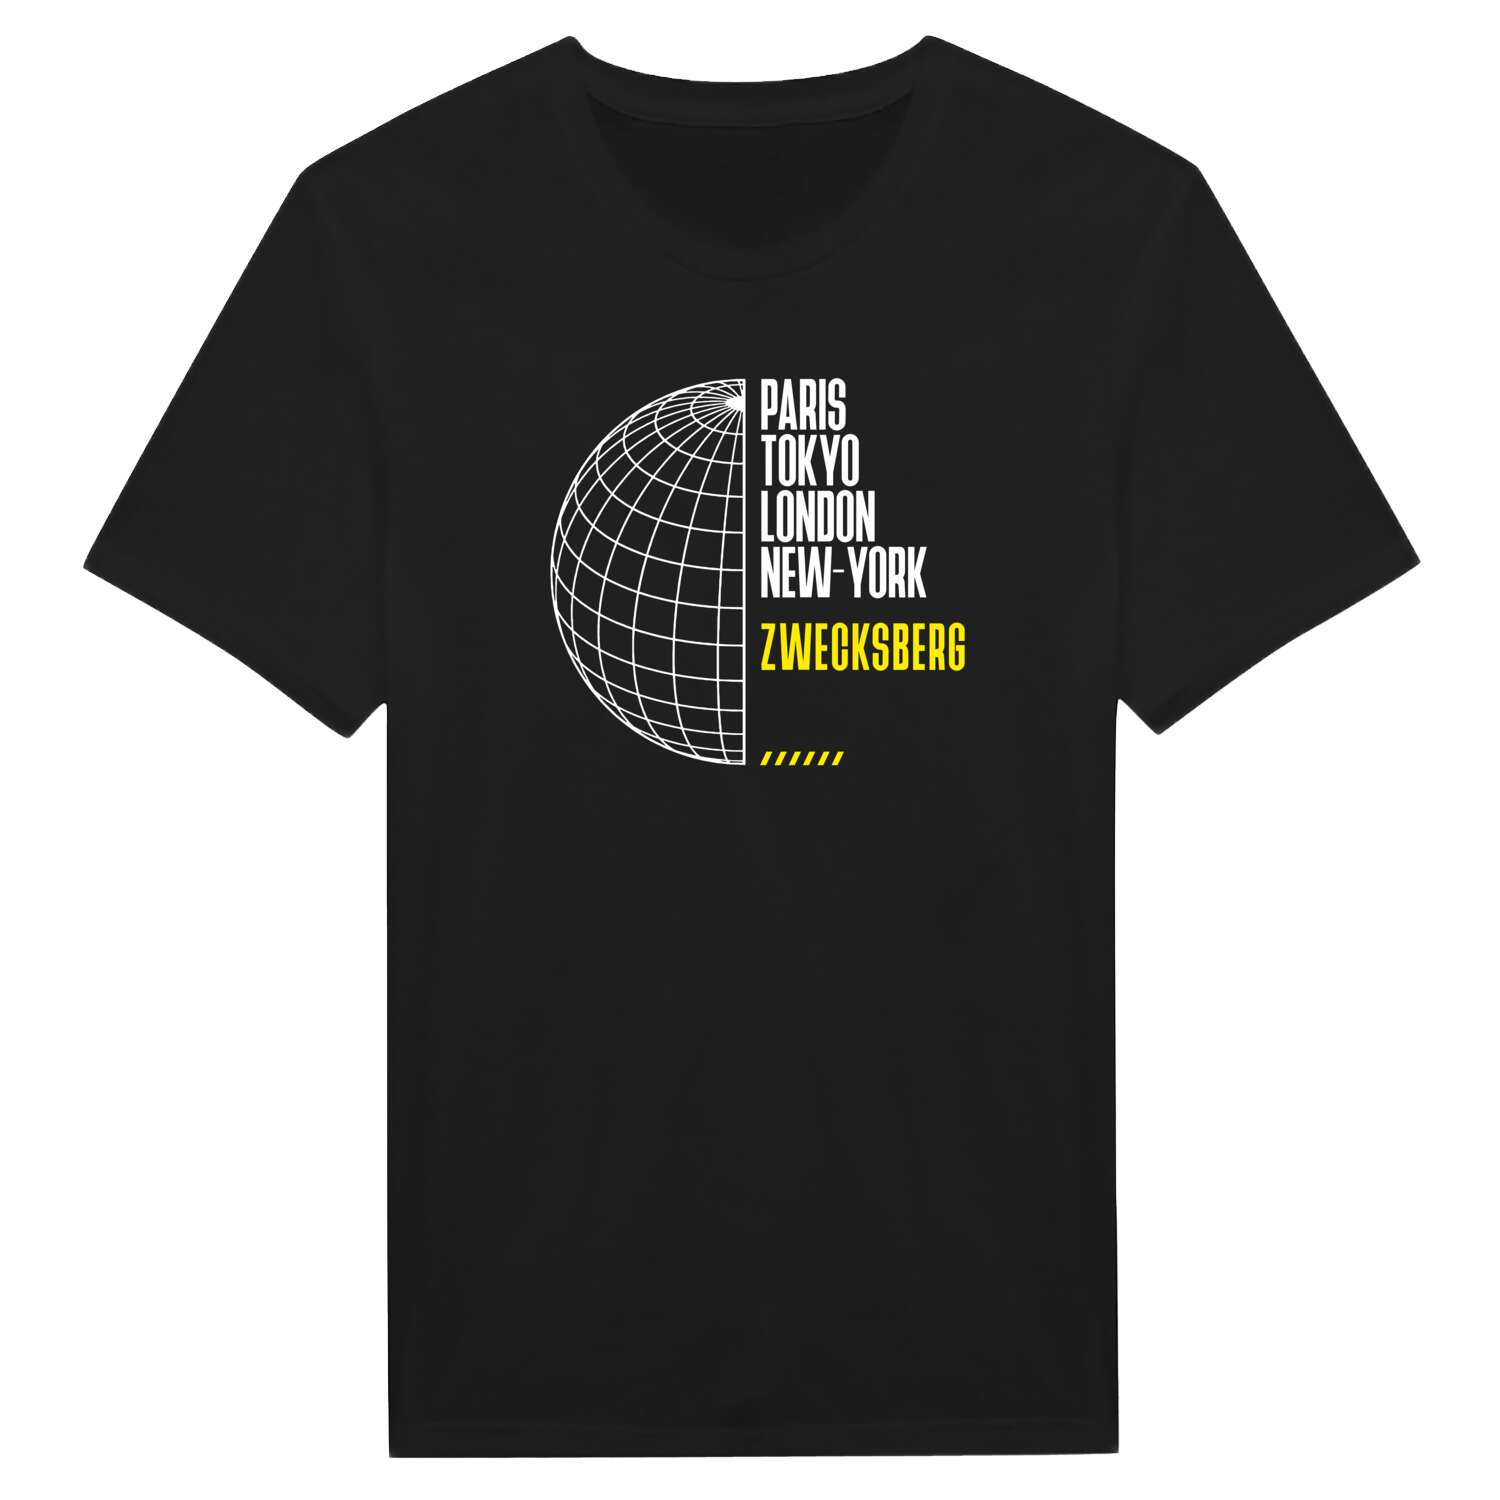 Zwecksberg T-Shirt »Paris Tokyo London«